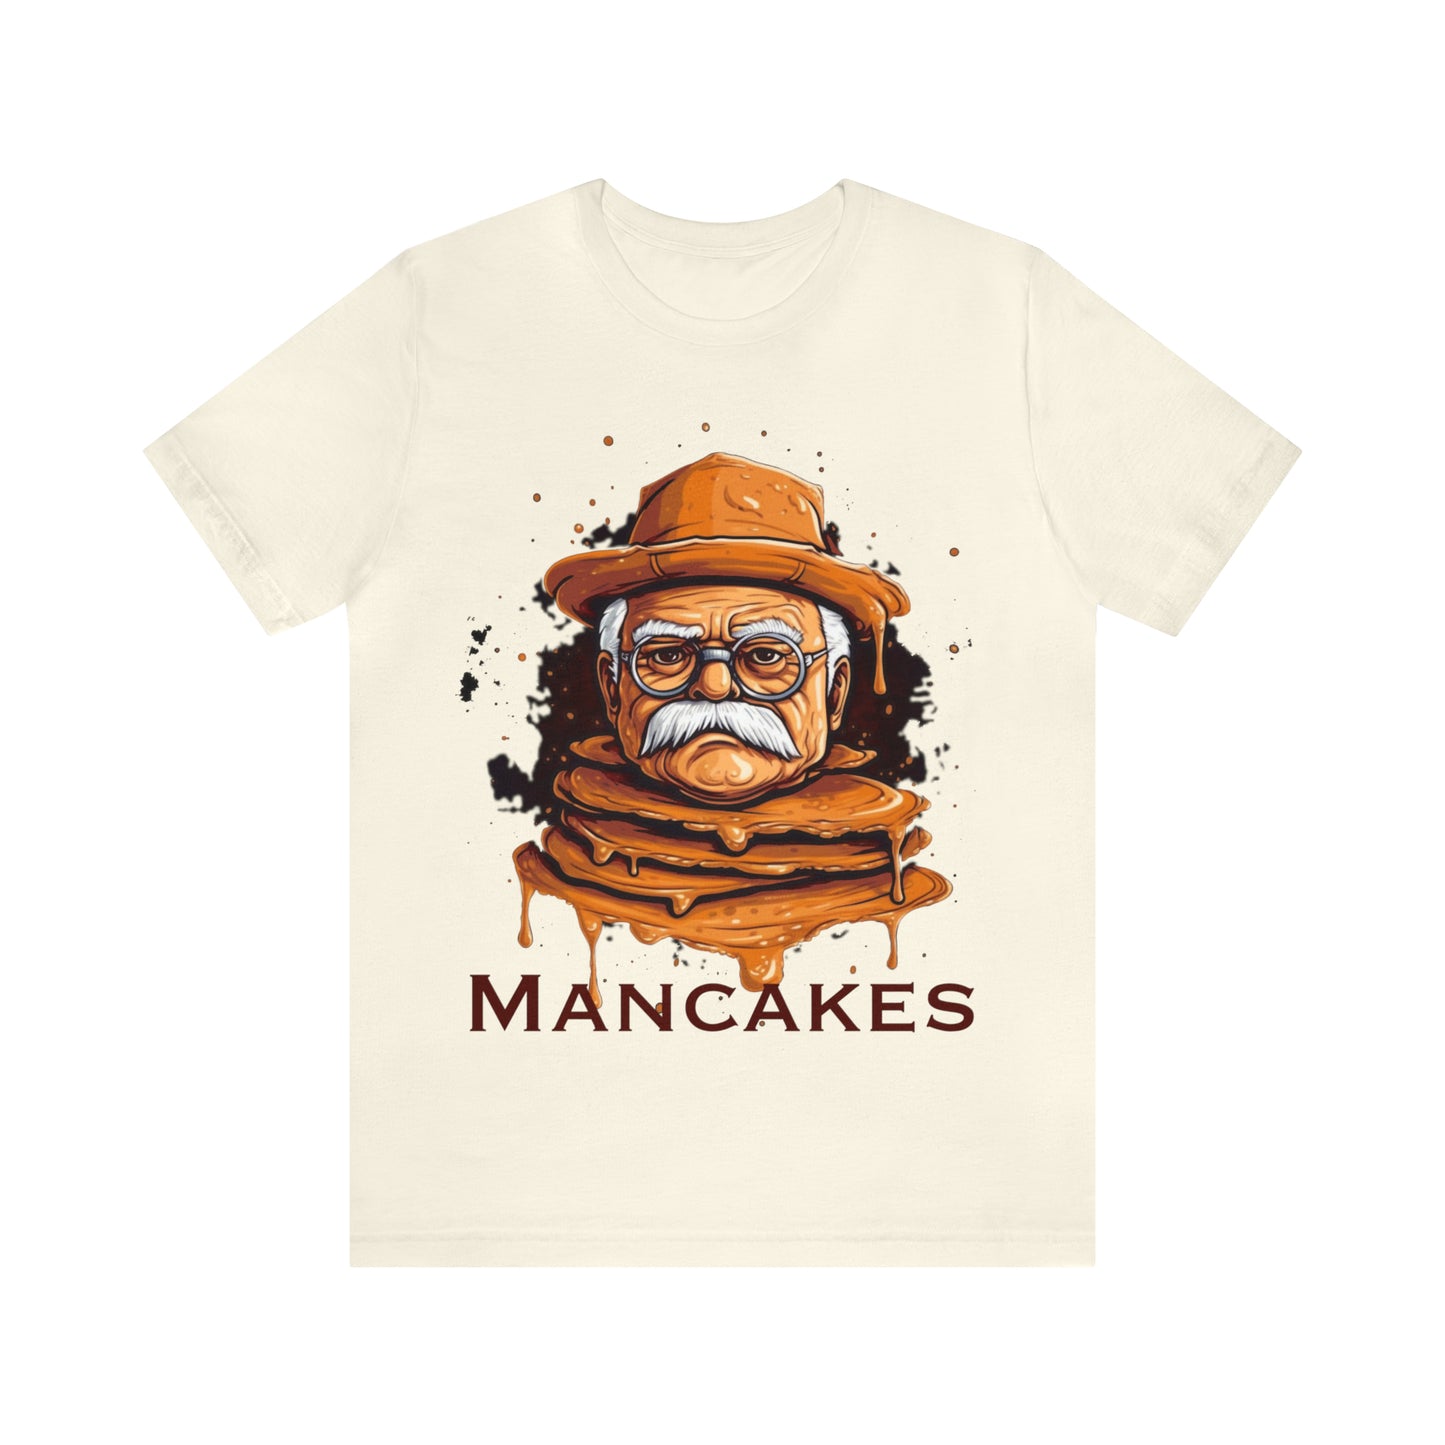 Mancakes (Large Print), Unisex Short Sleeve Tee